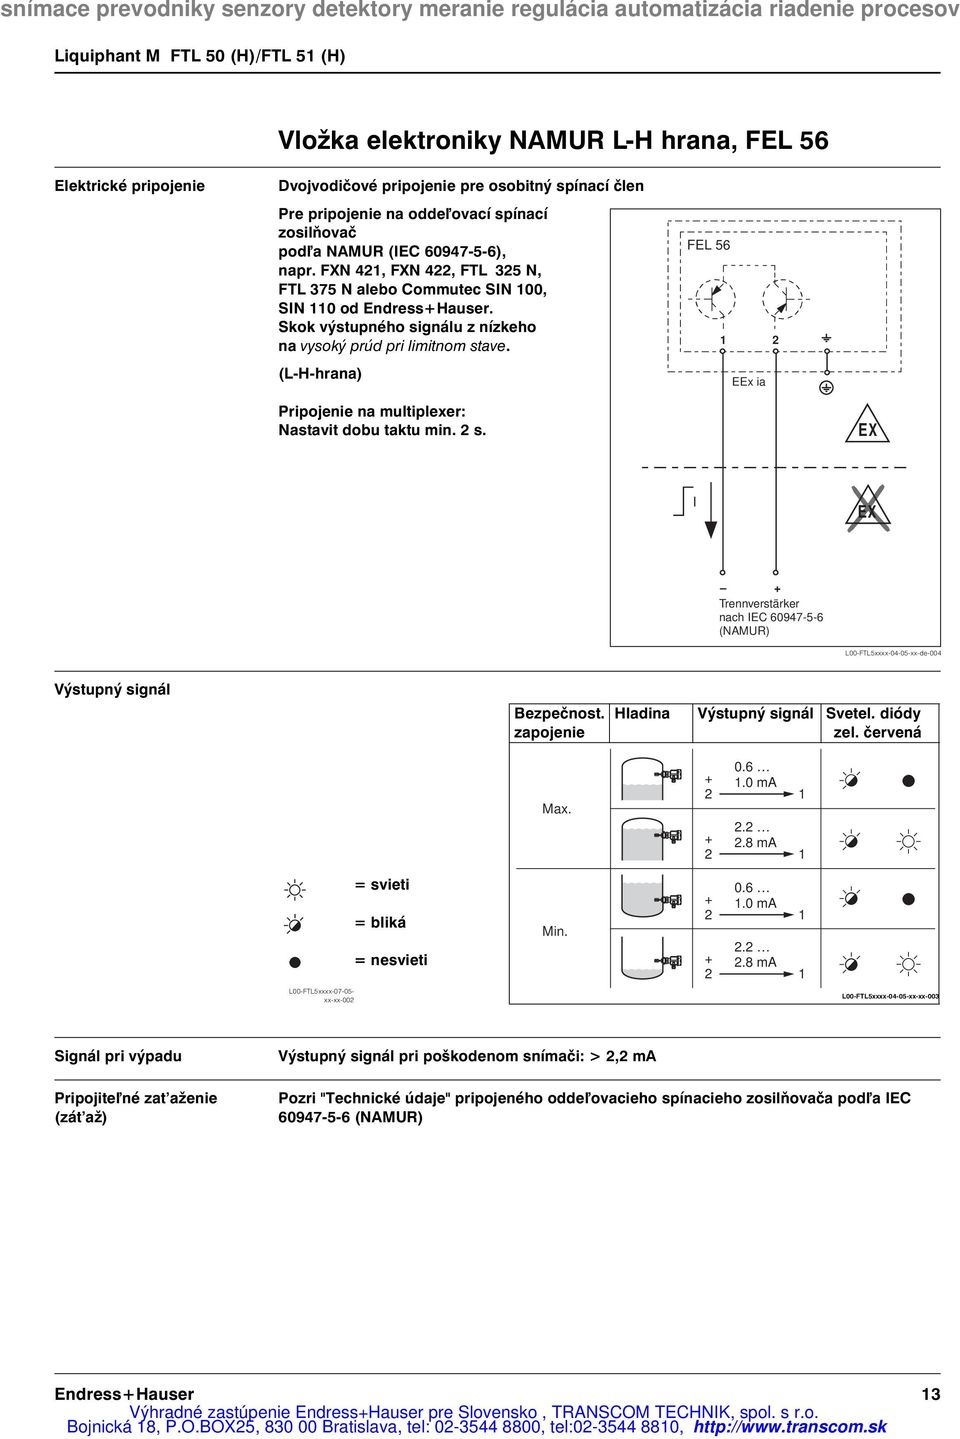 (L-H-hrana) FEL 56 1 2 EEx ia Pripojenie na multiplexer: Nastavit dobu taktu min. 2 s. EX I EX + Trennverstärker nach IEC 60947-5-6 (NAMUR) L00-FTL5xxxx-04-05-xx-de-004 Výstupný signál Bezpečnost.